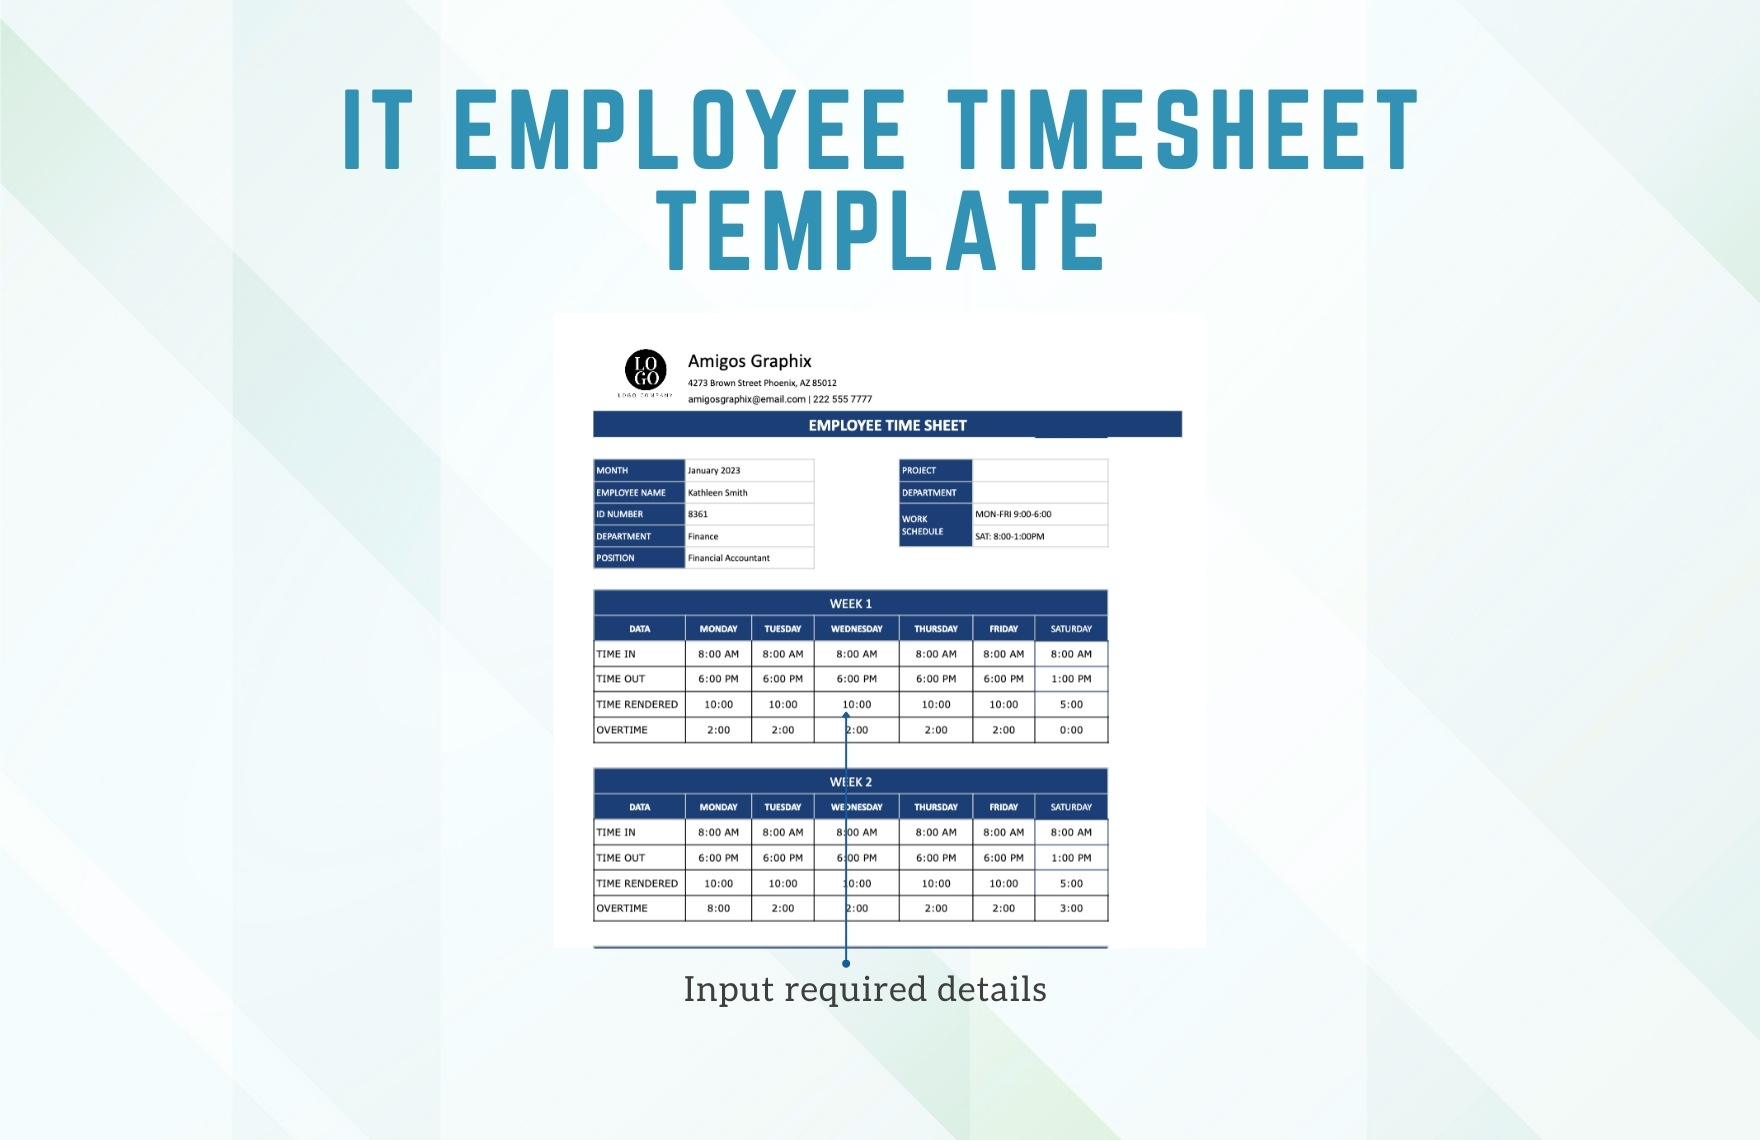 IT Employee Timesheet Template